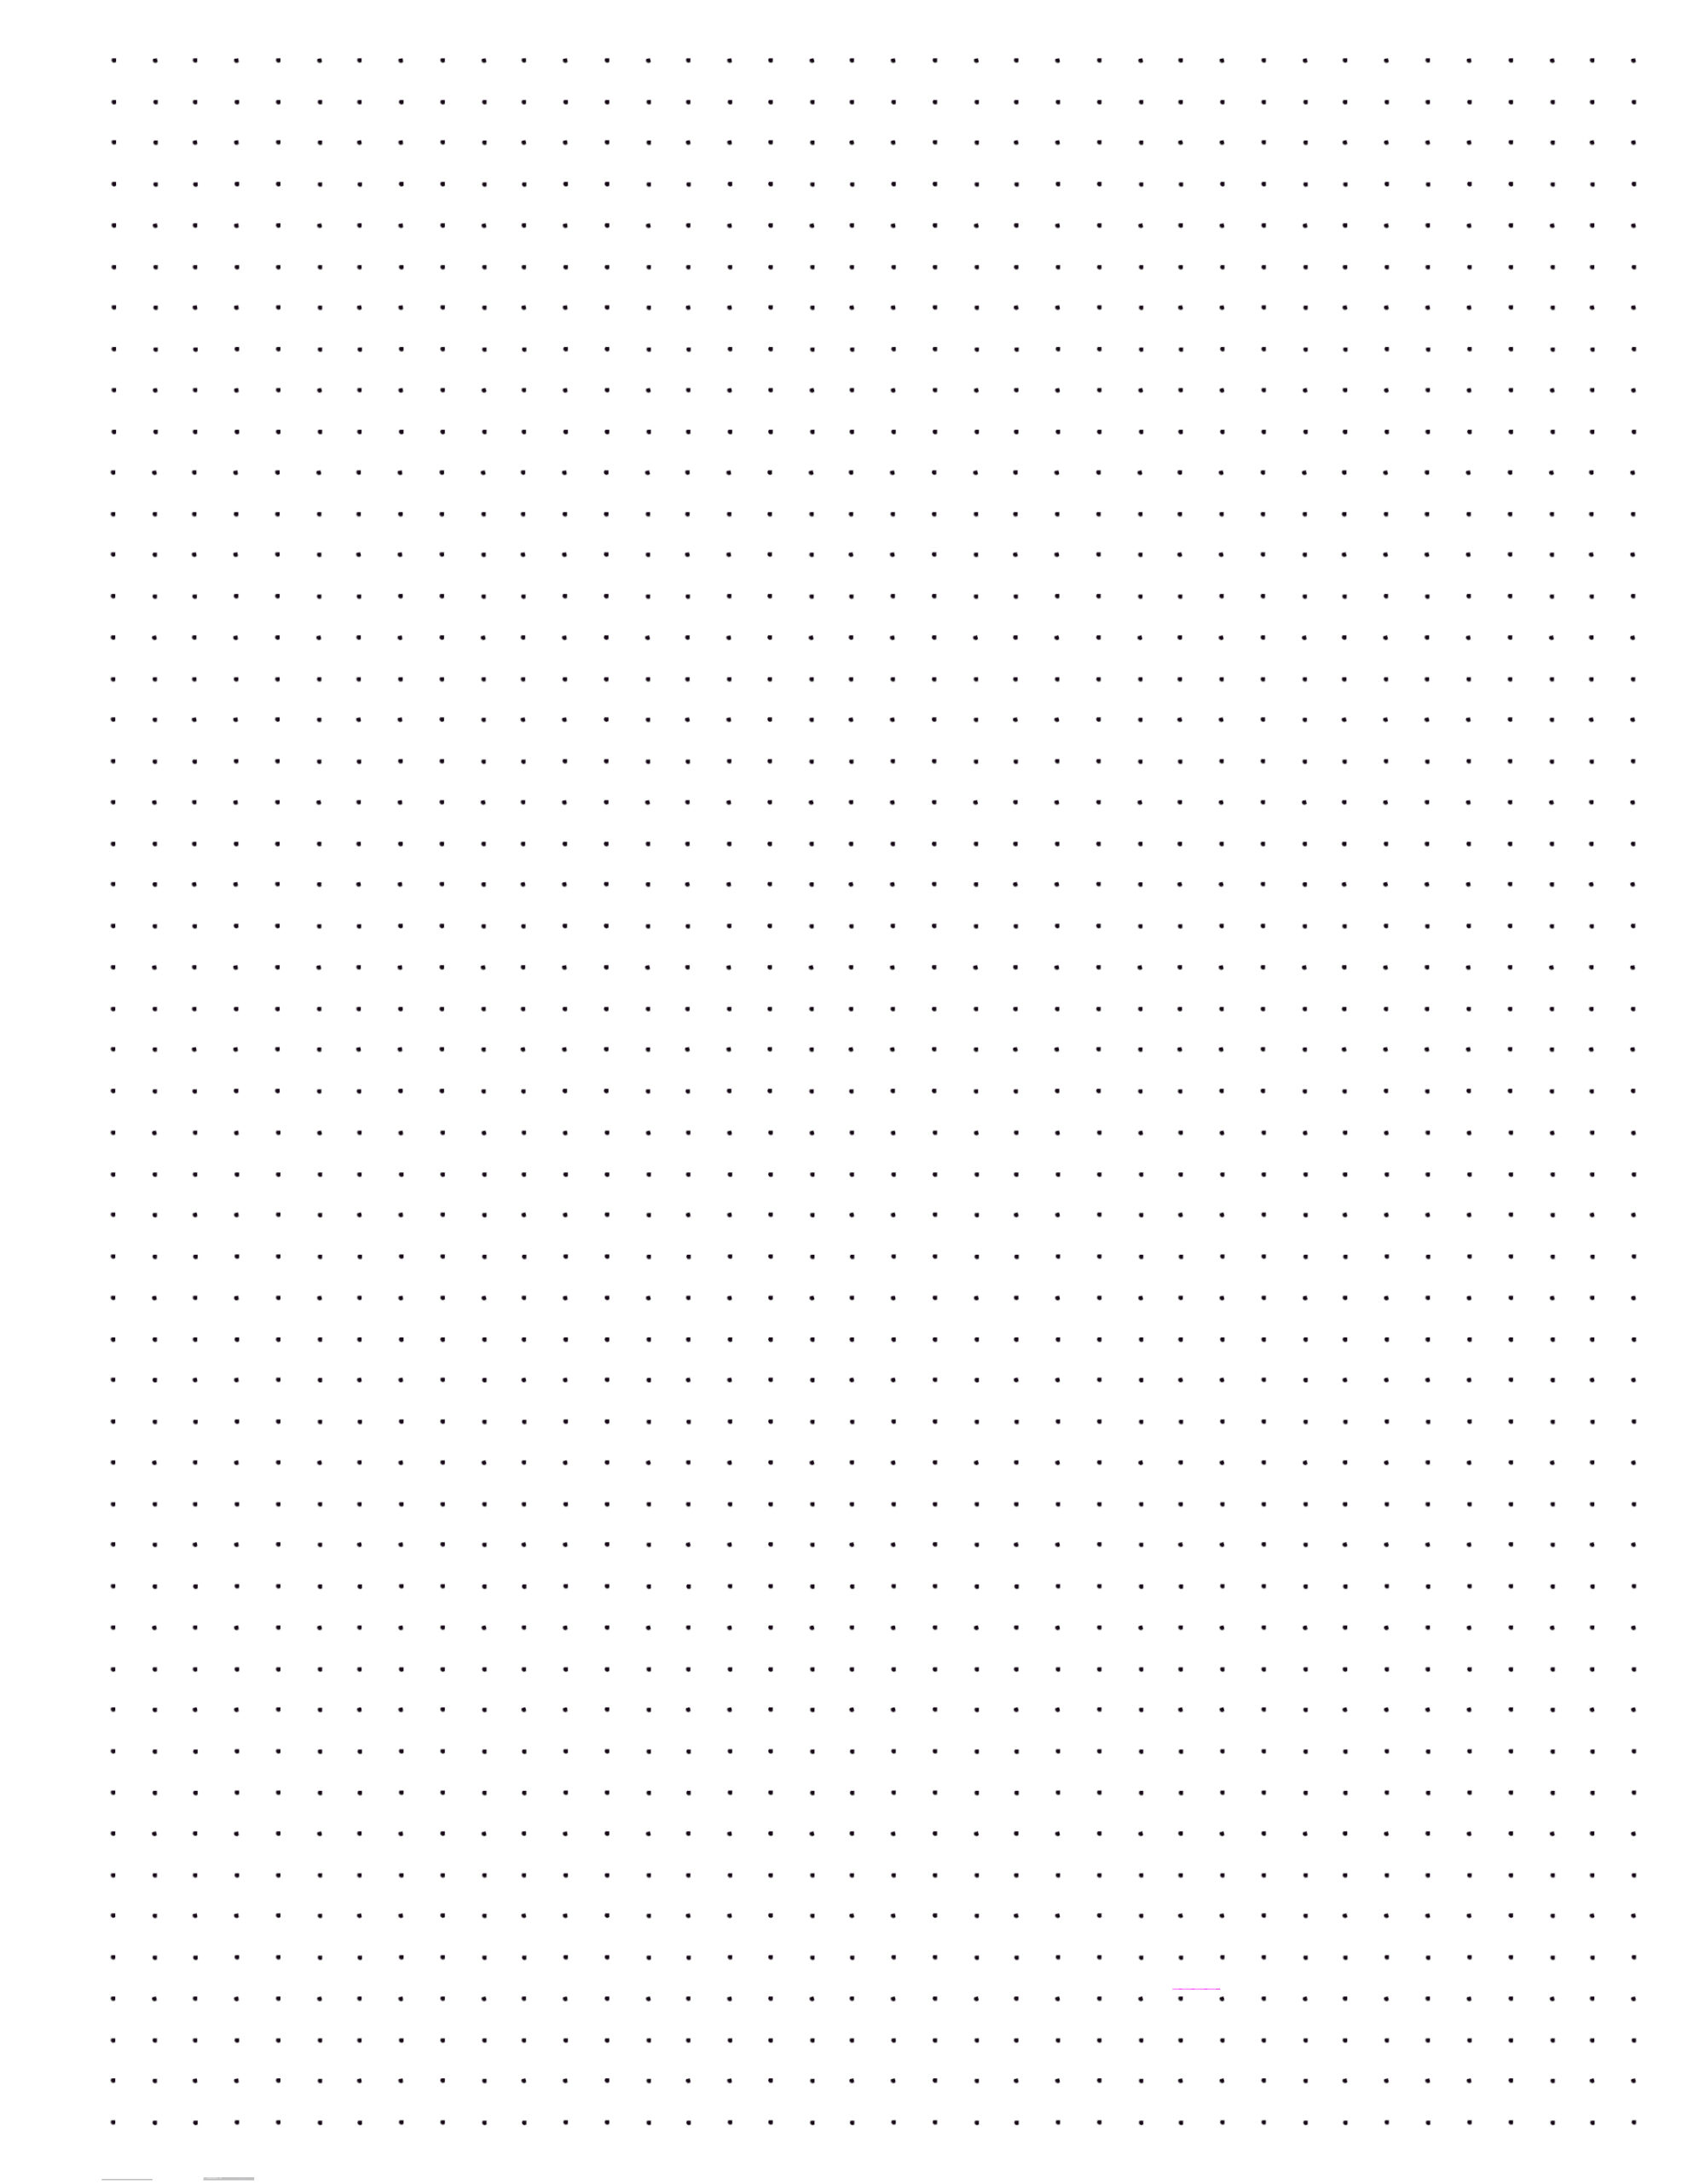 free-dot-grid-paper-printable-printable-templates